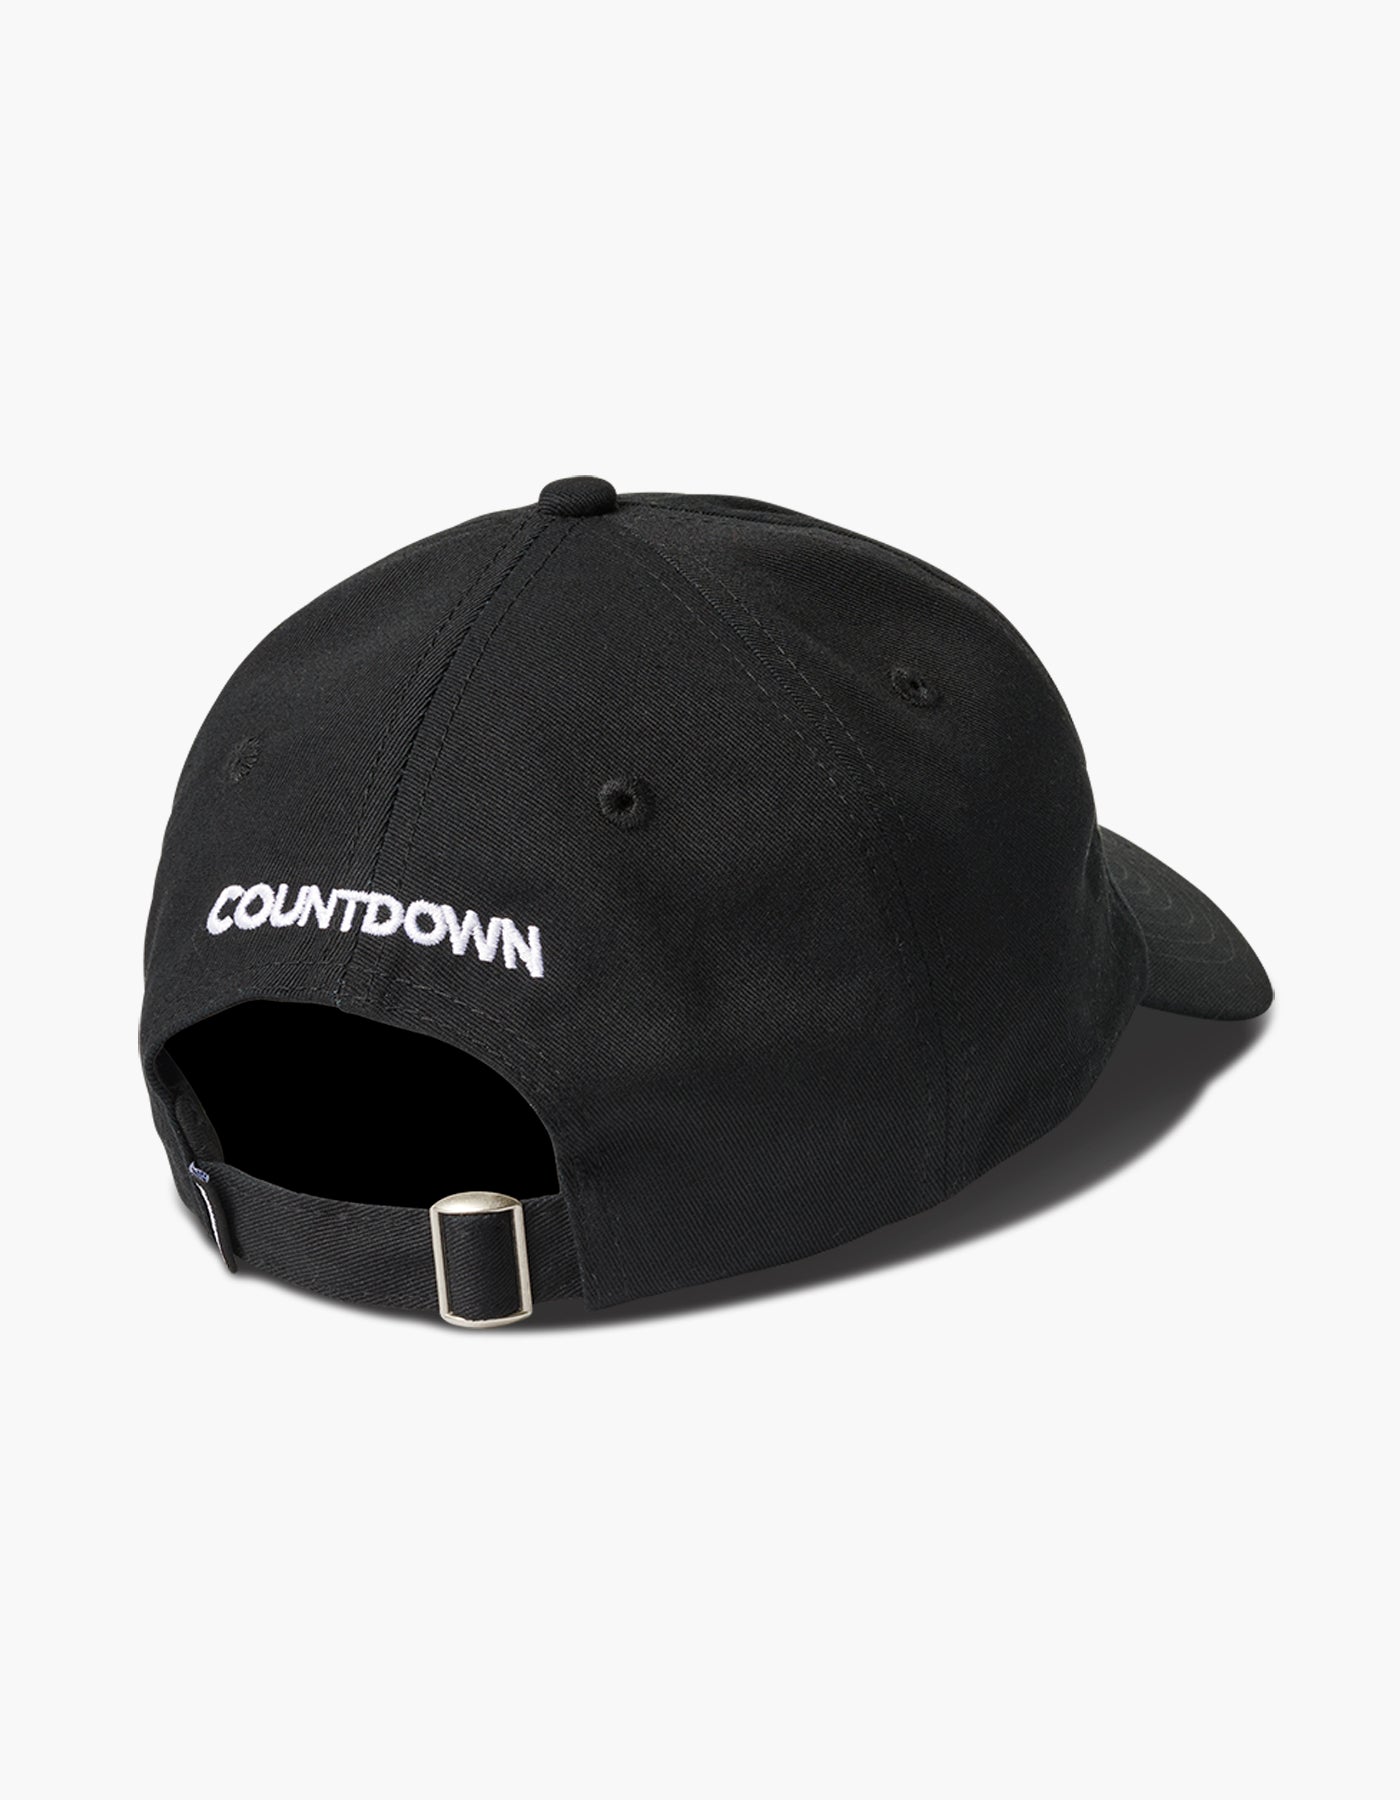 Countdown Dad Hat